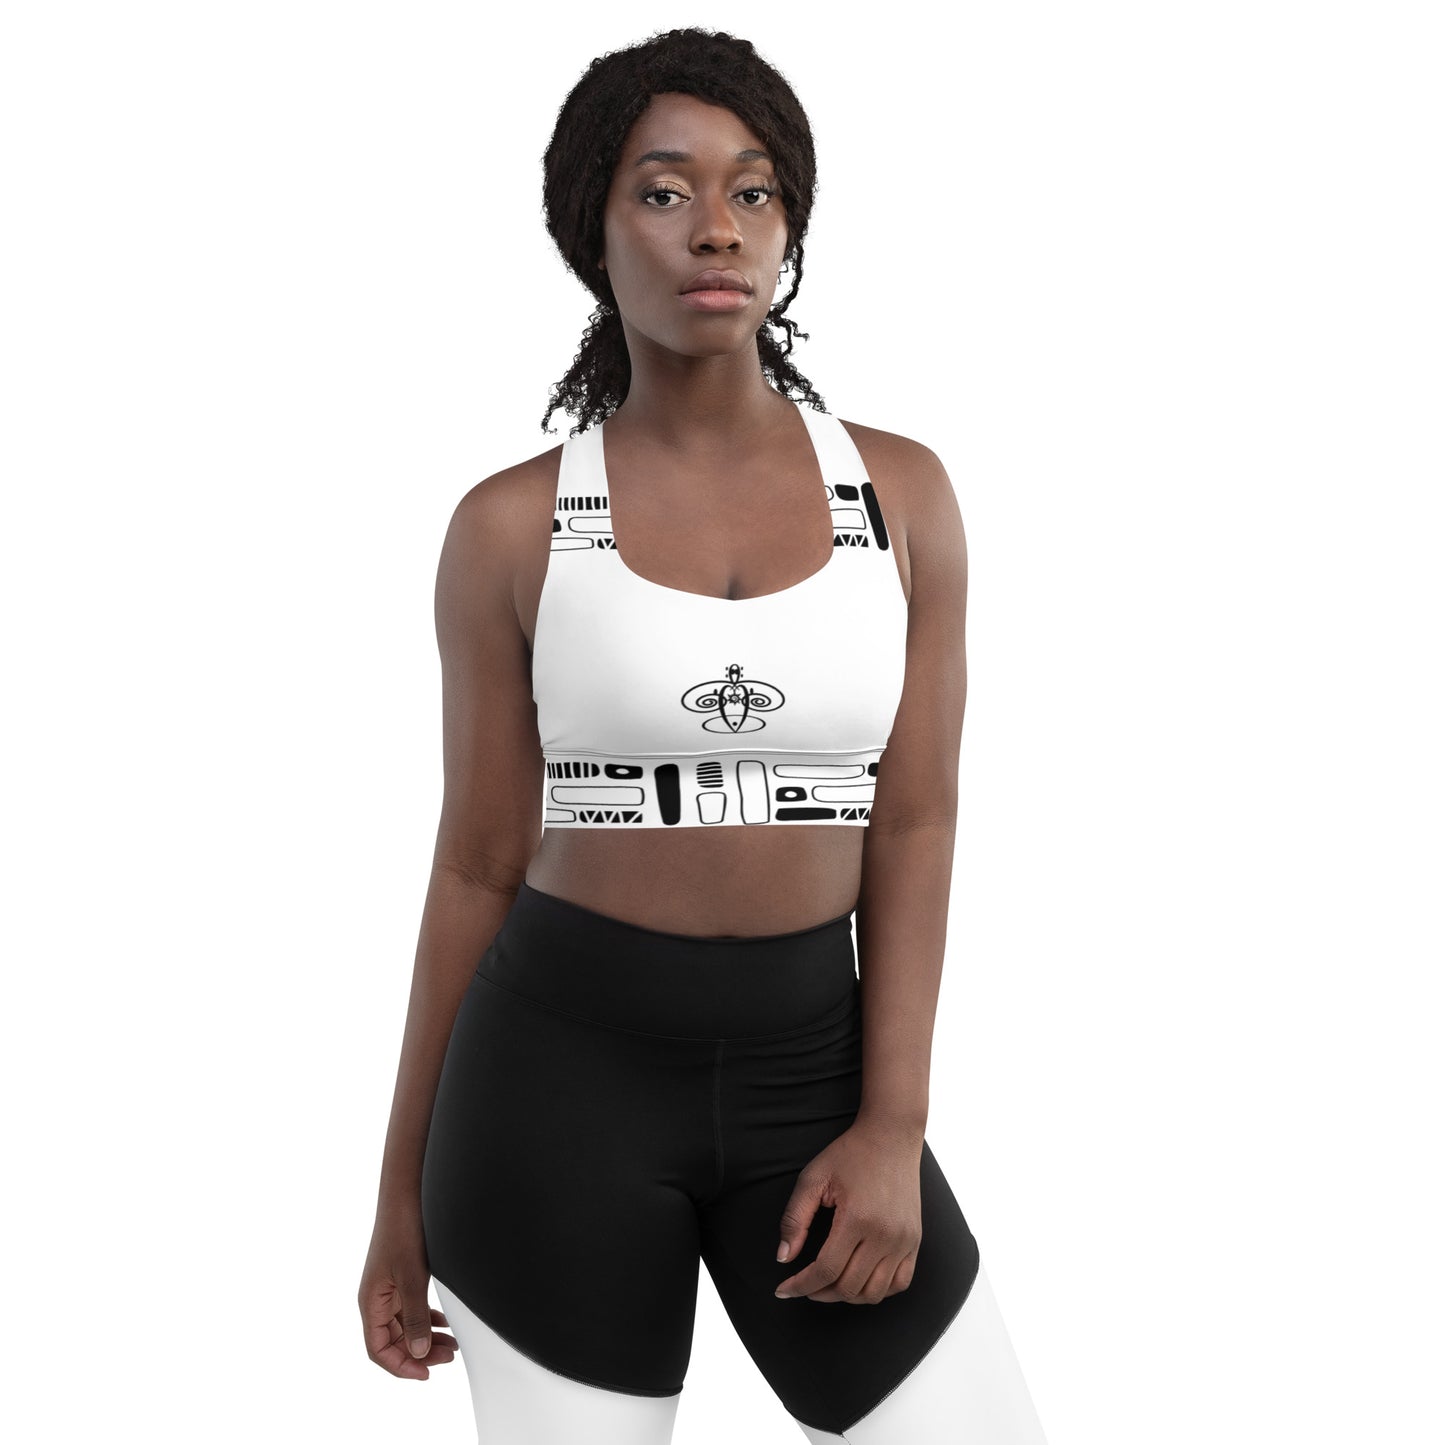 Longline sports bra 1 / Fitness Woman's bra.